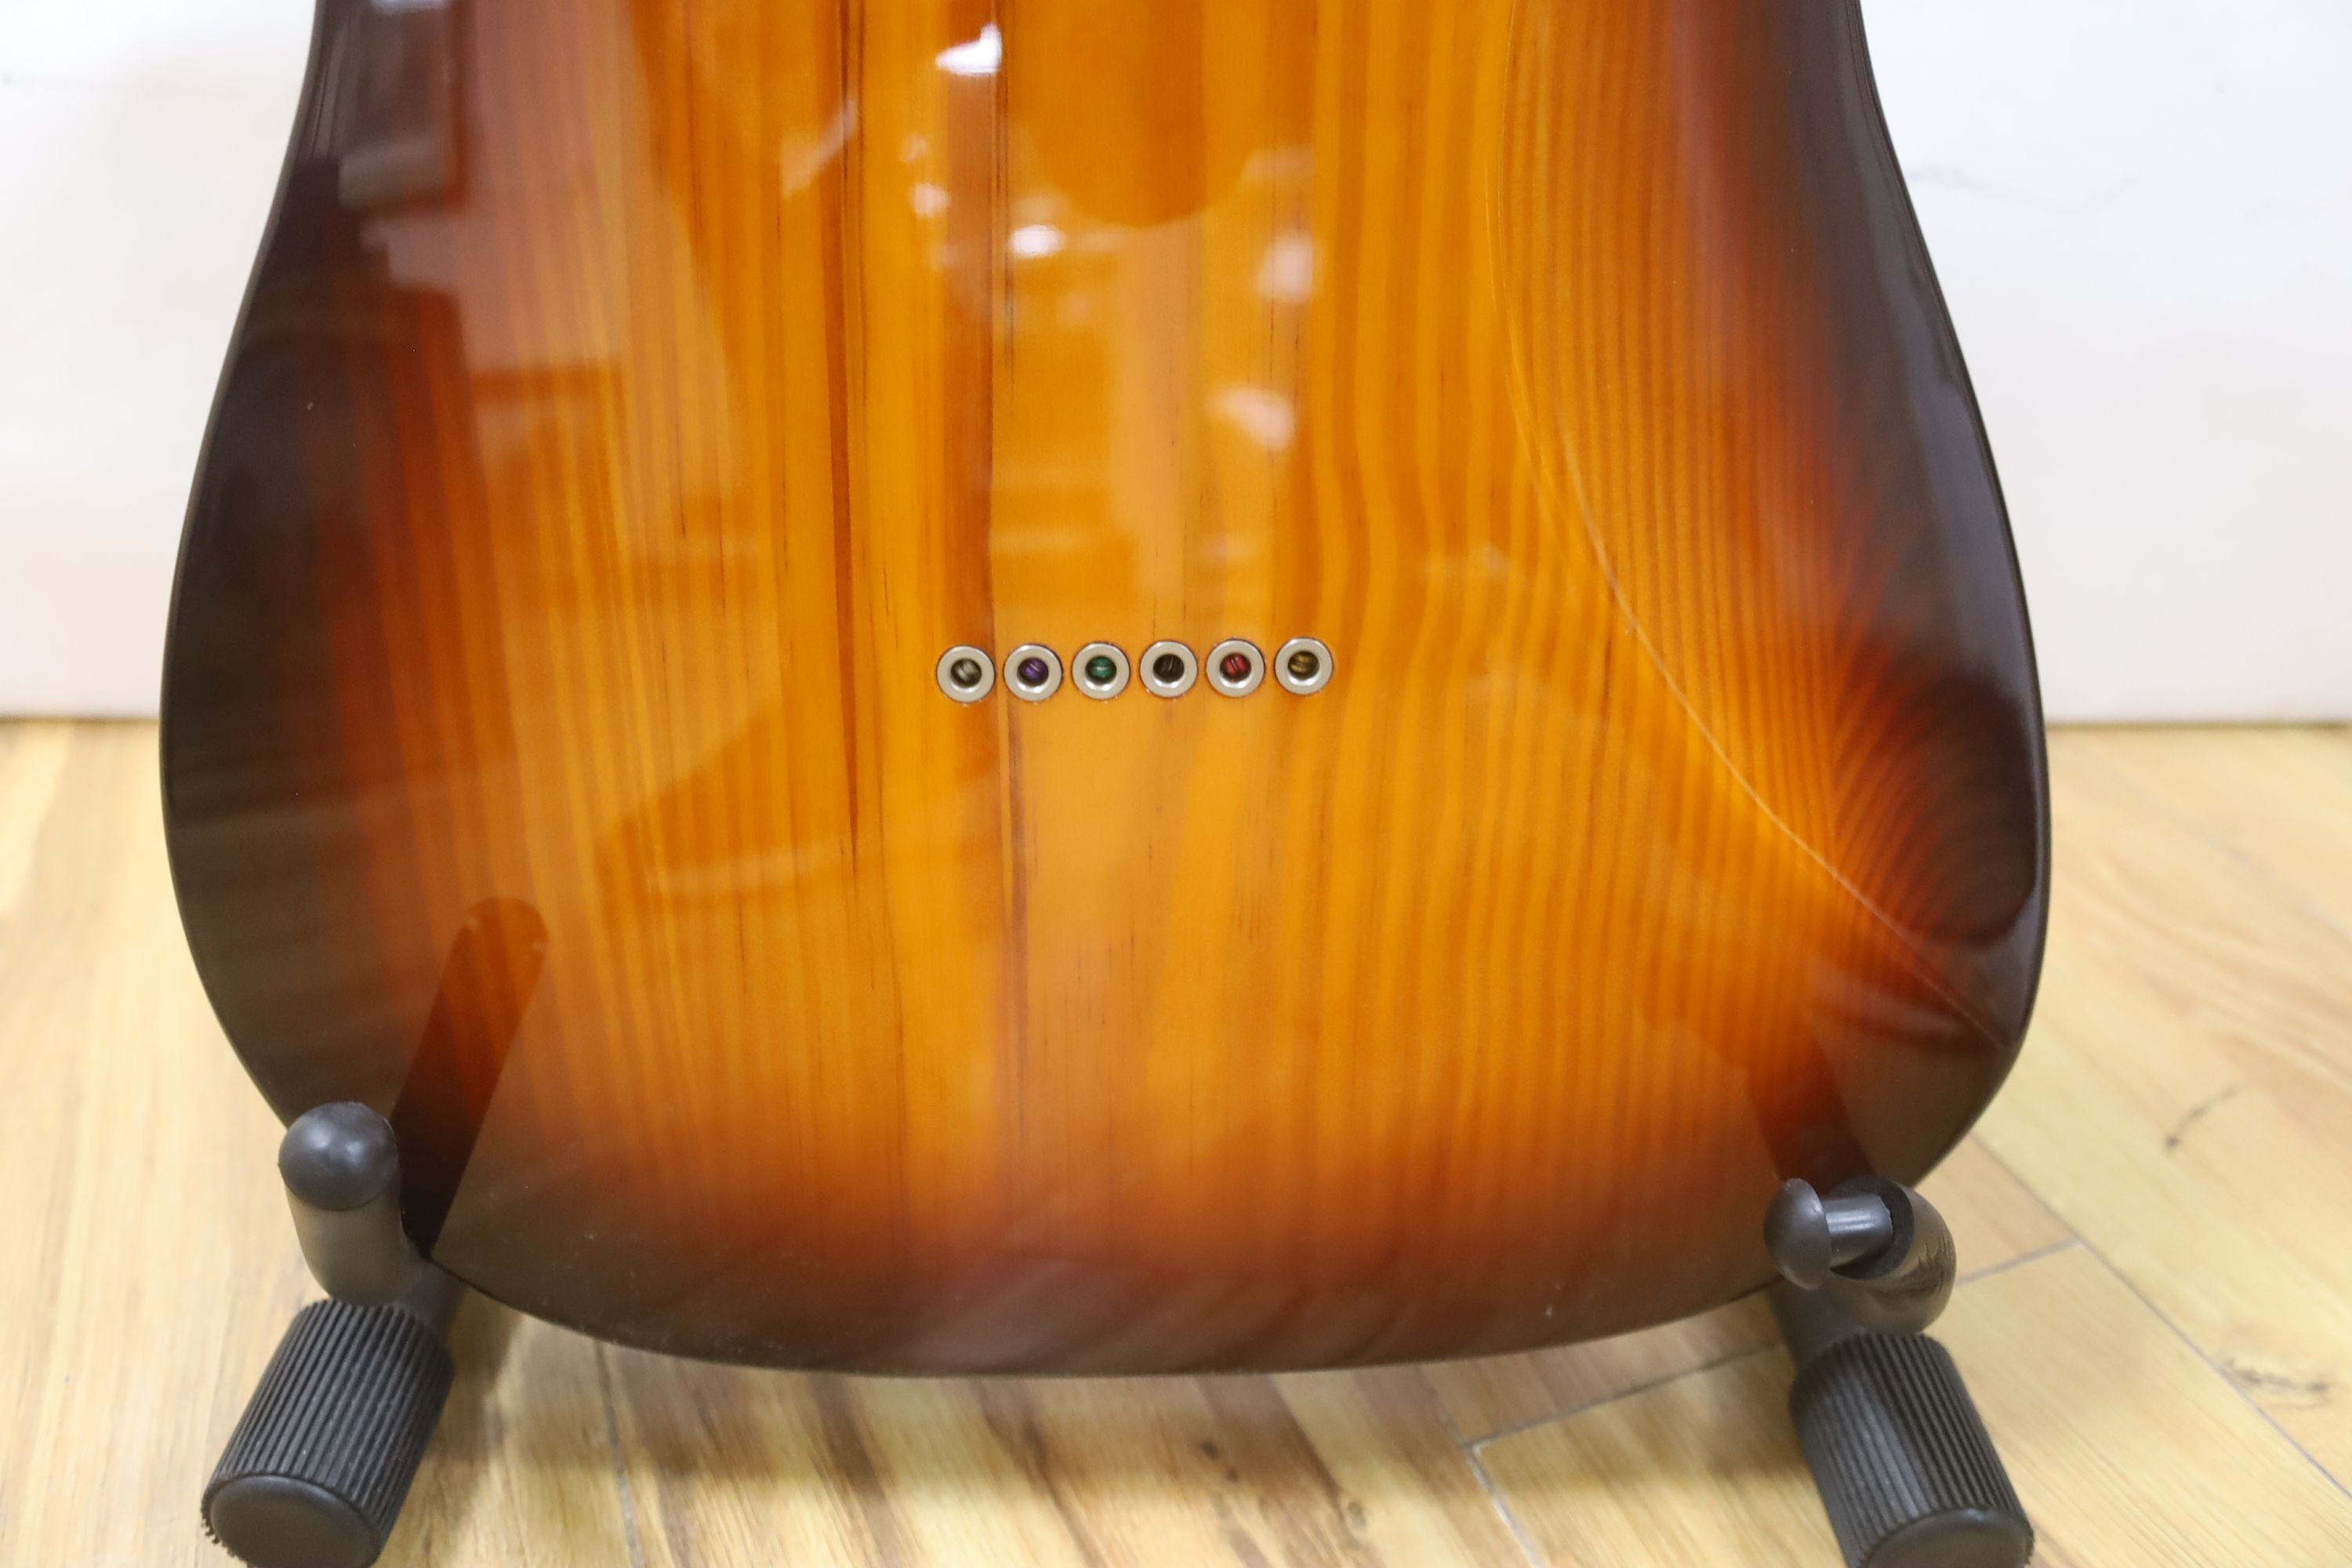 A Fender Telecaster guitar. Serial number CGF1314464